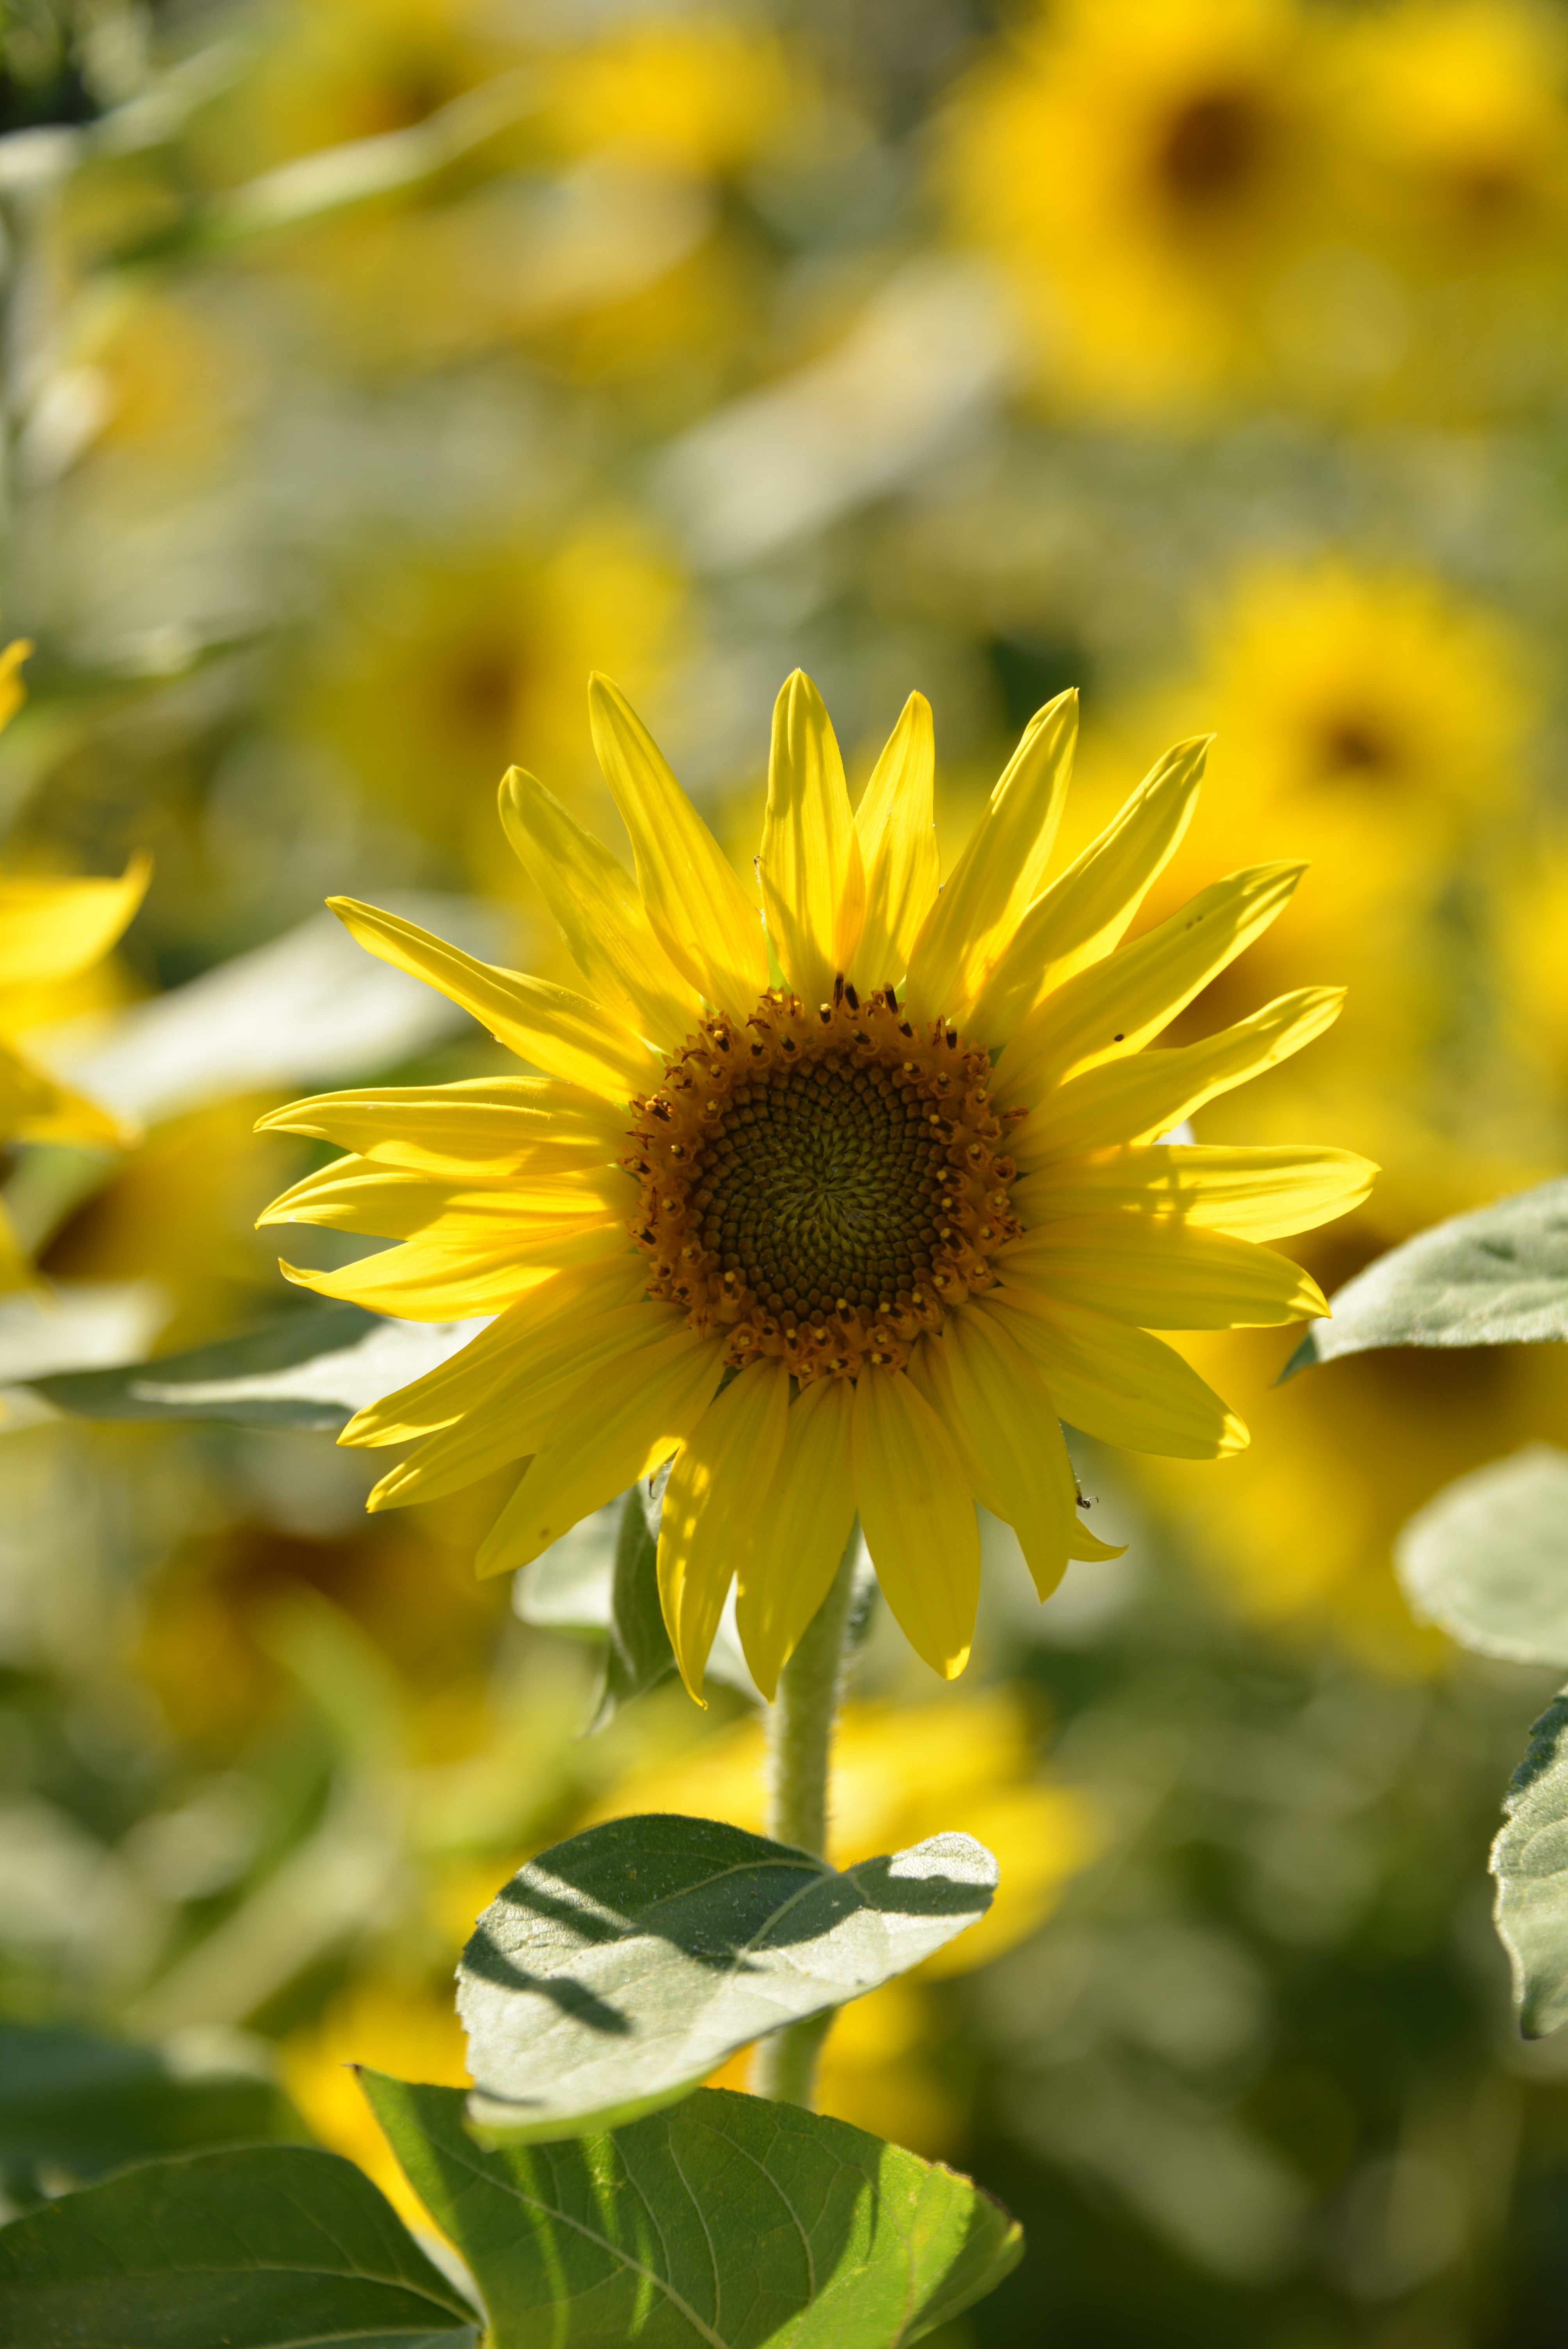 yellow sunflower blooming at daytime